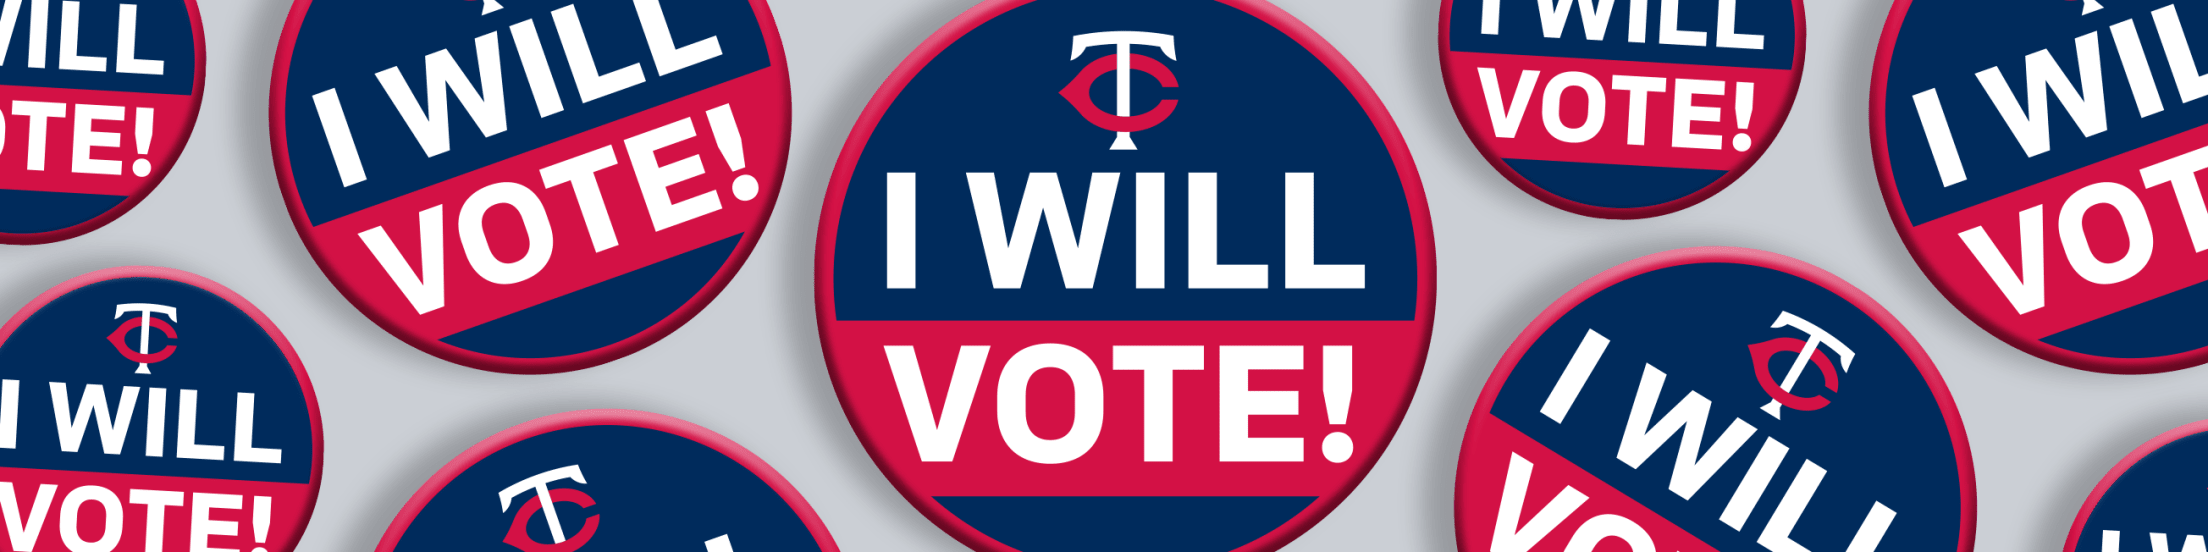 Minnesota Twins - It's as easy as ABC! Vote Twins: mlb.com/all